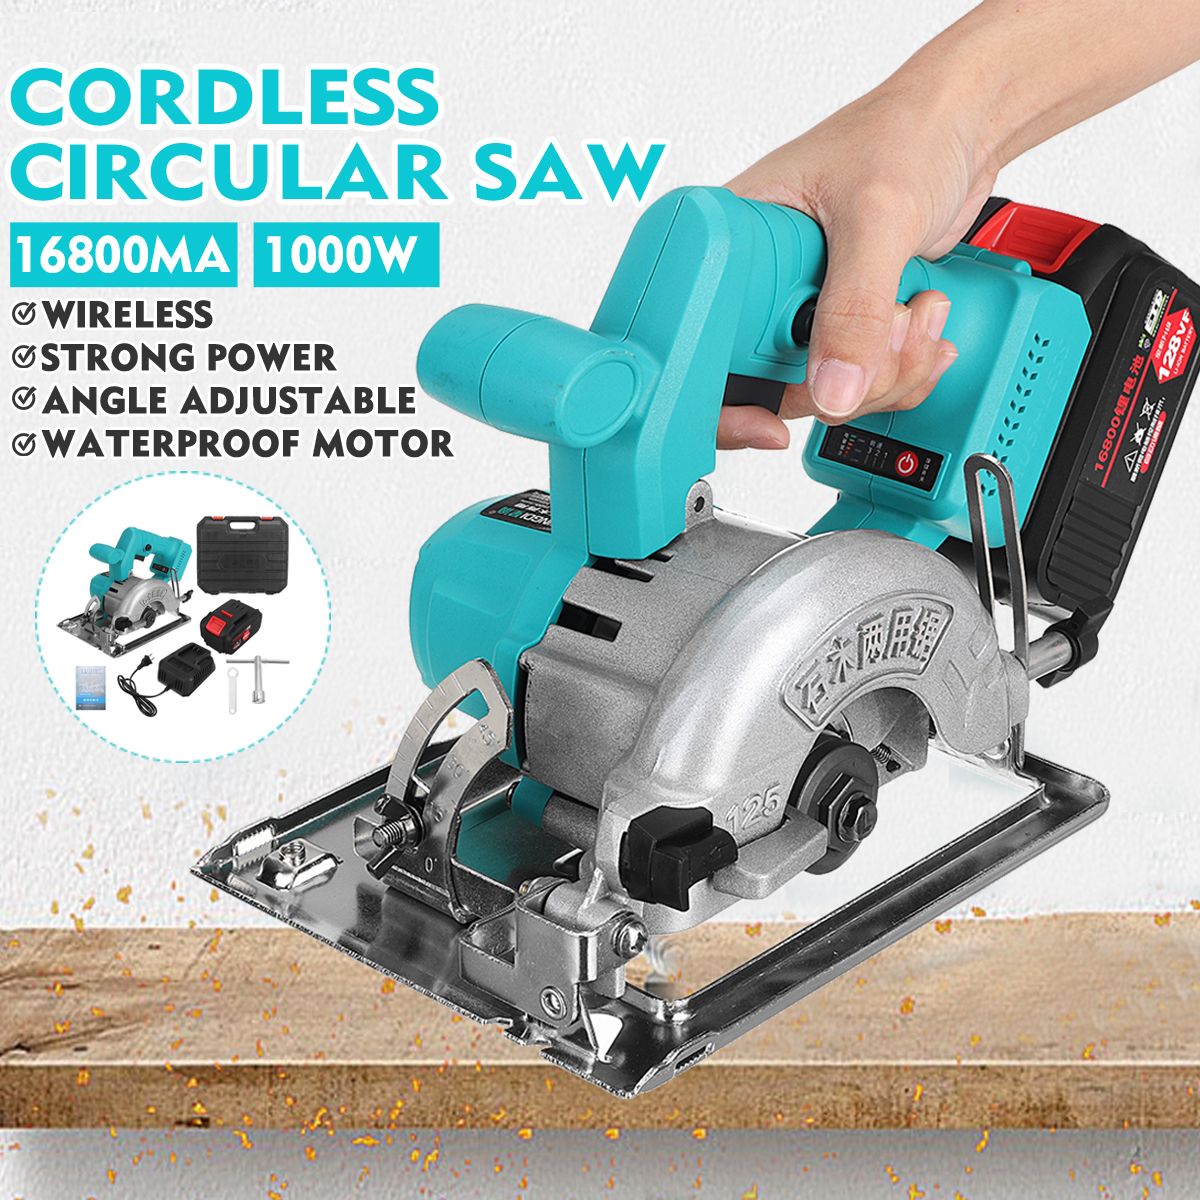 1000W-16800MA-Electric-Circular-Saw-125mm-Blade-Cordless-Circular-Saw-Angle-Adjustable-for-Woodworki-1696587